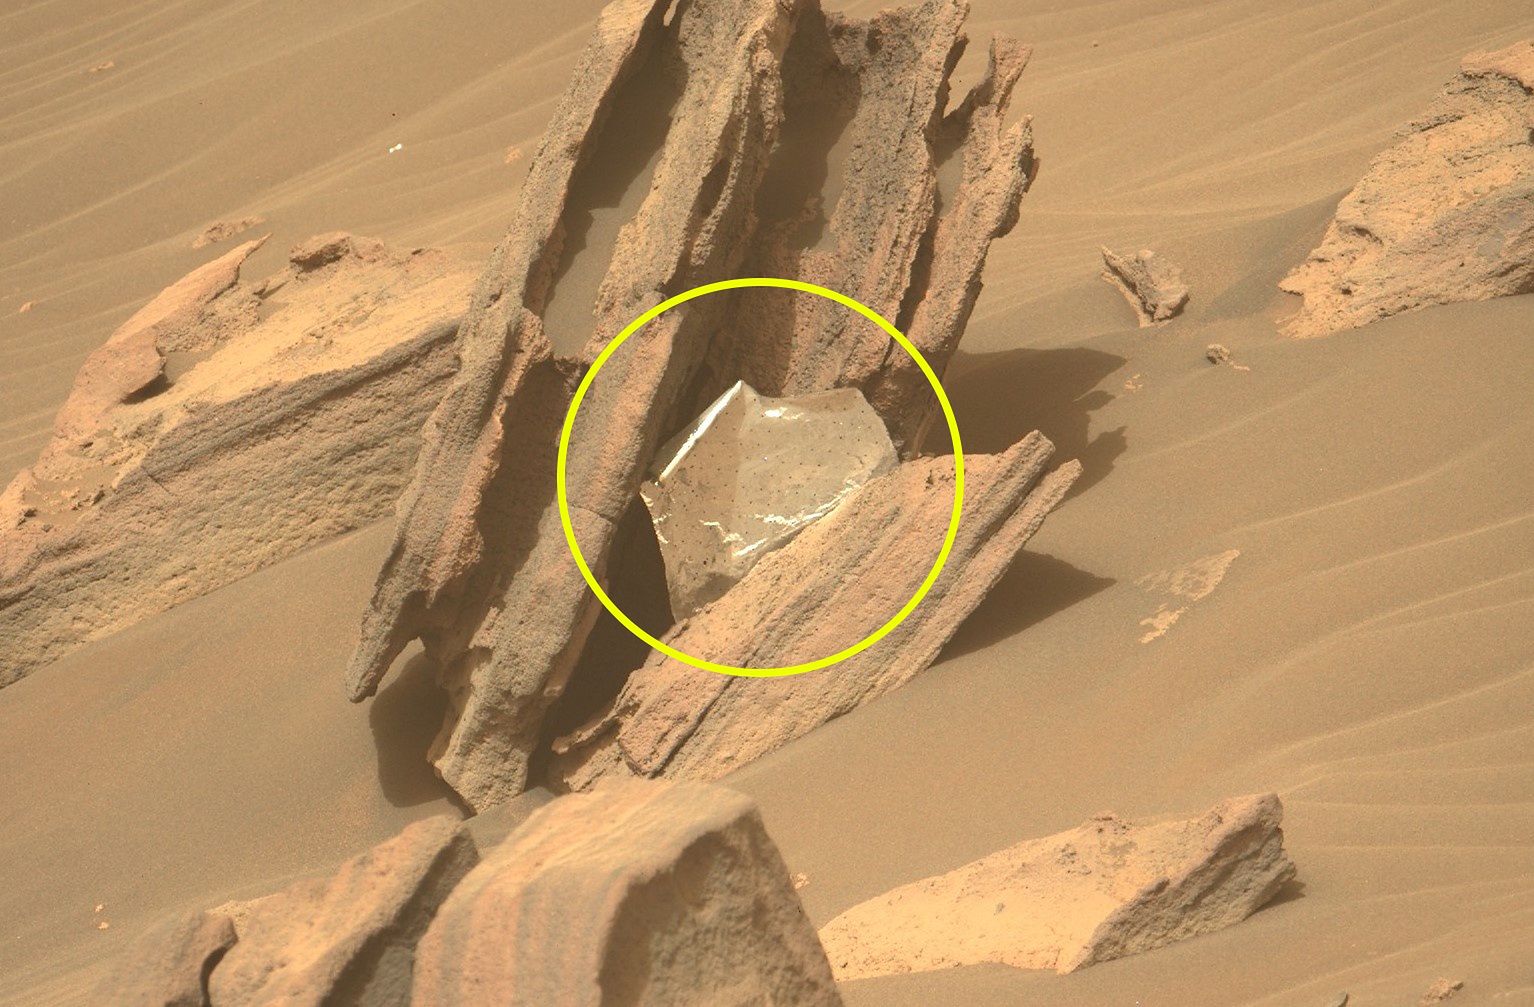 Shame on humanity.  Found on Mars - O2